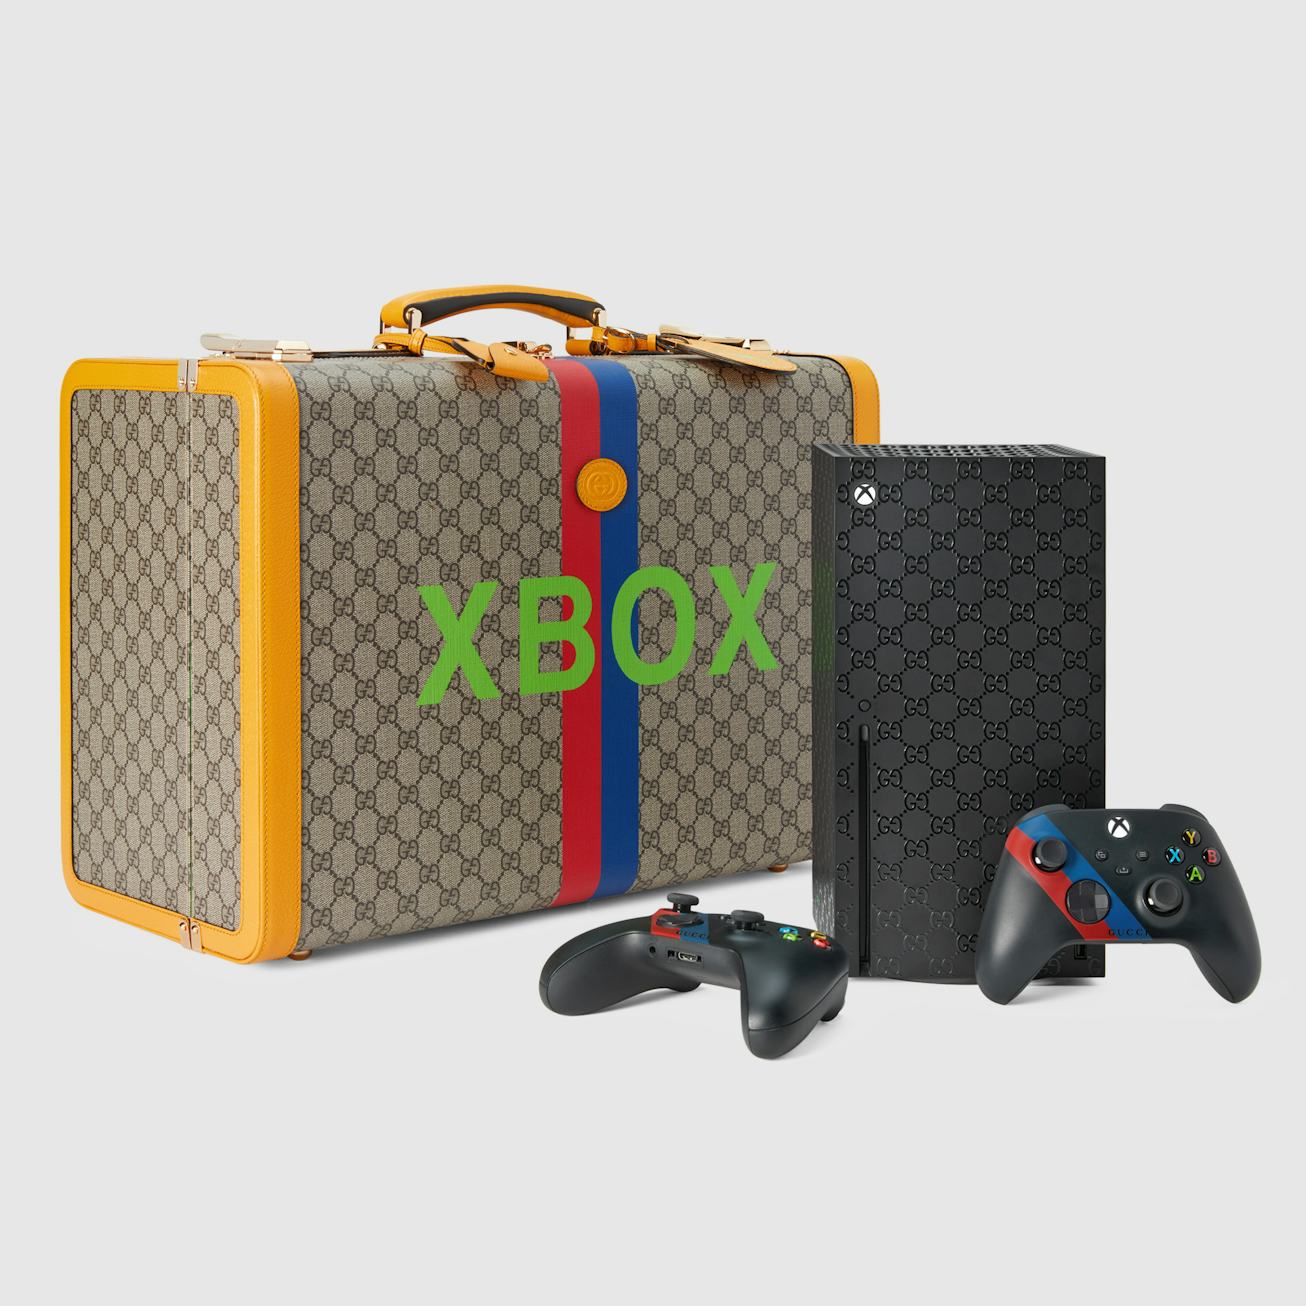 Gucci x Xbox Series X console bundle set.